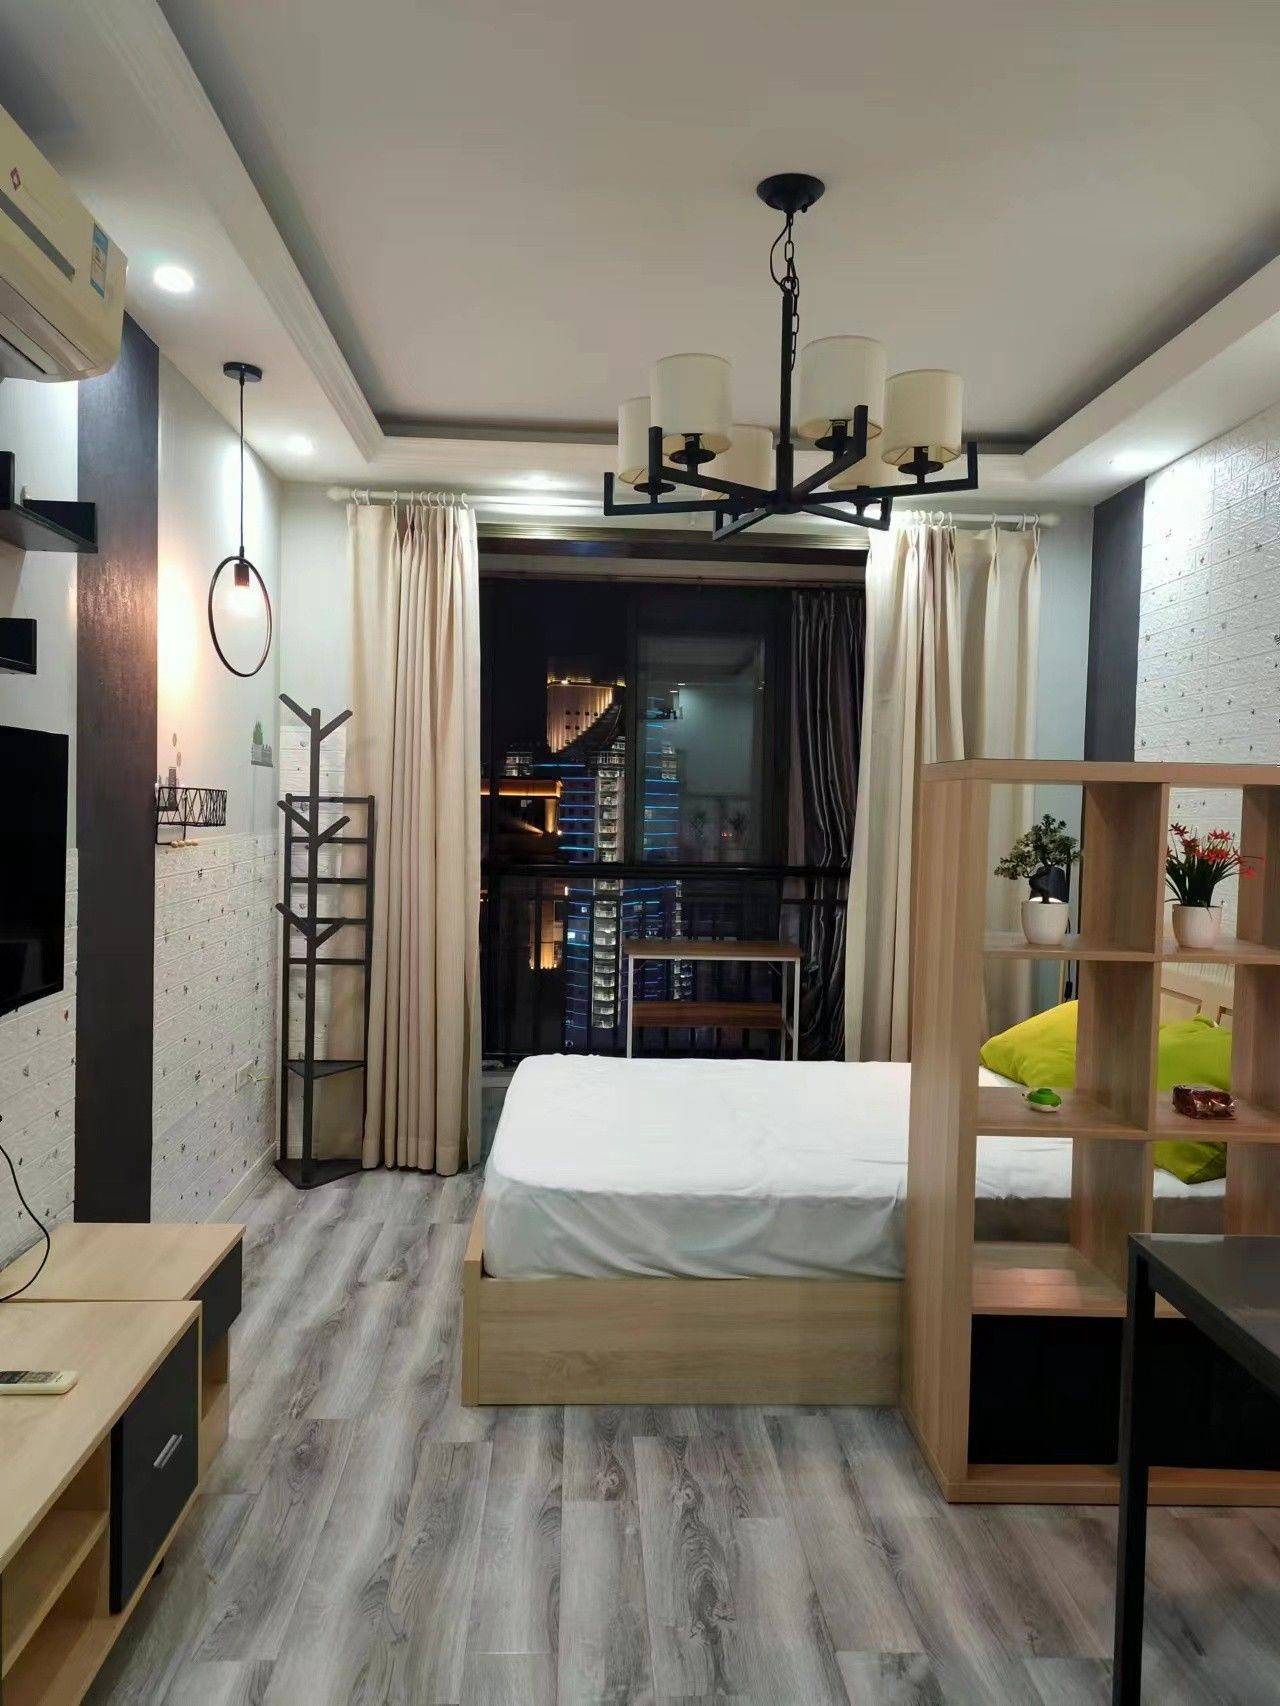 Chongqing-Jiulongpo-Cozy Home,Clean&Comfy,No Gender Limit,Hustle & Bustle,Chilled